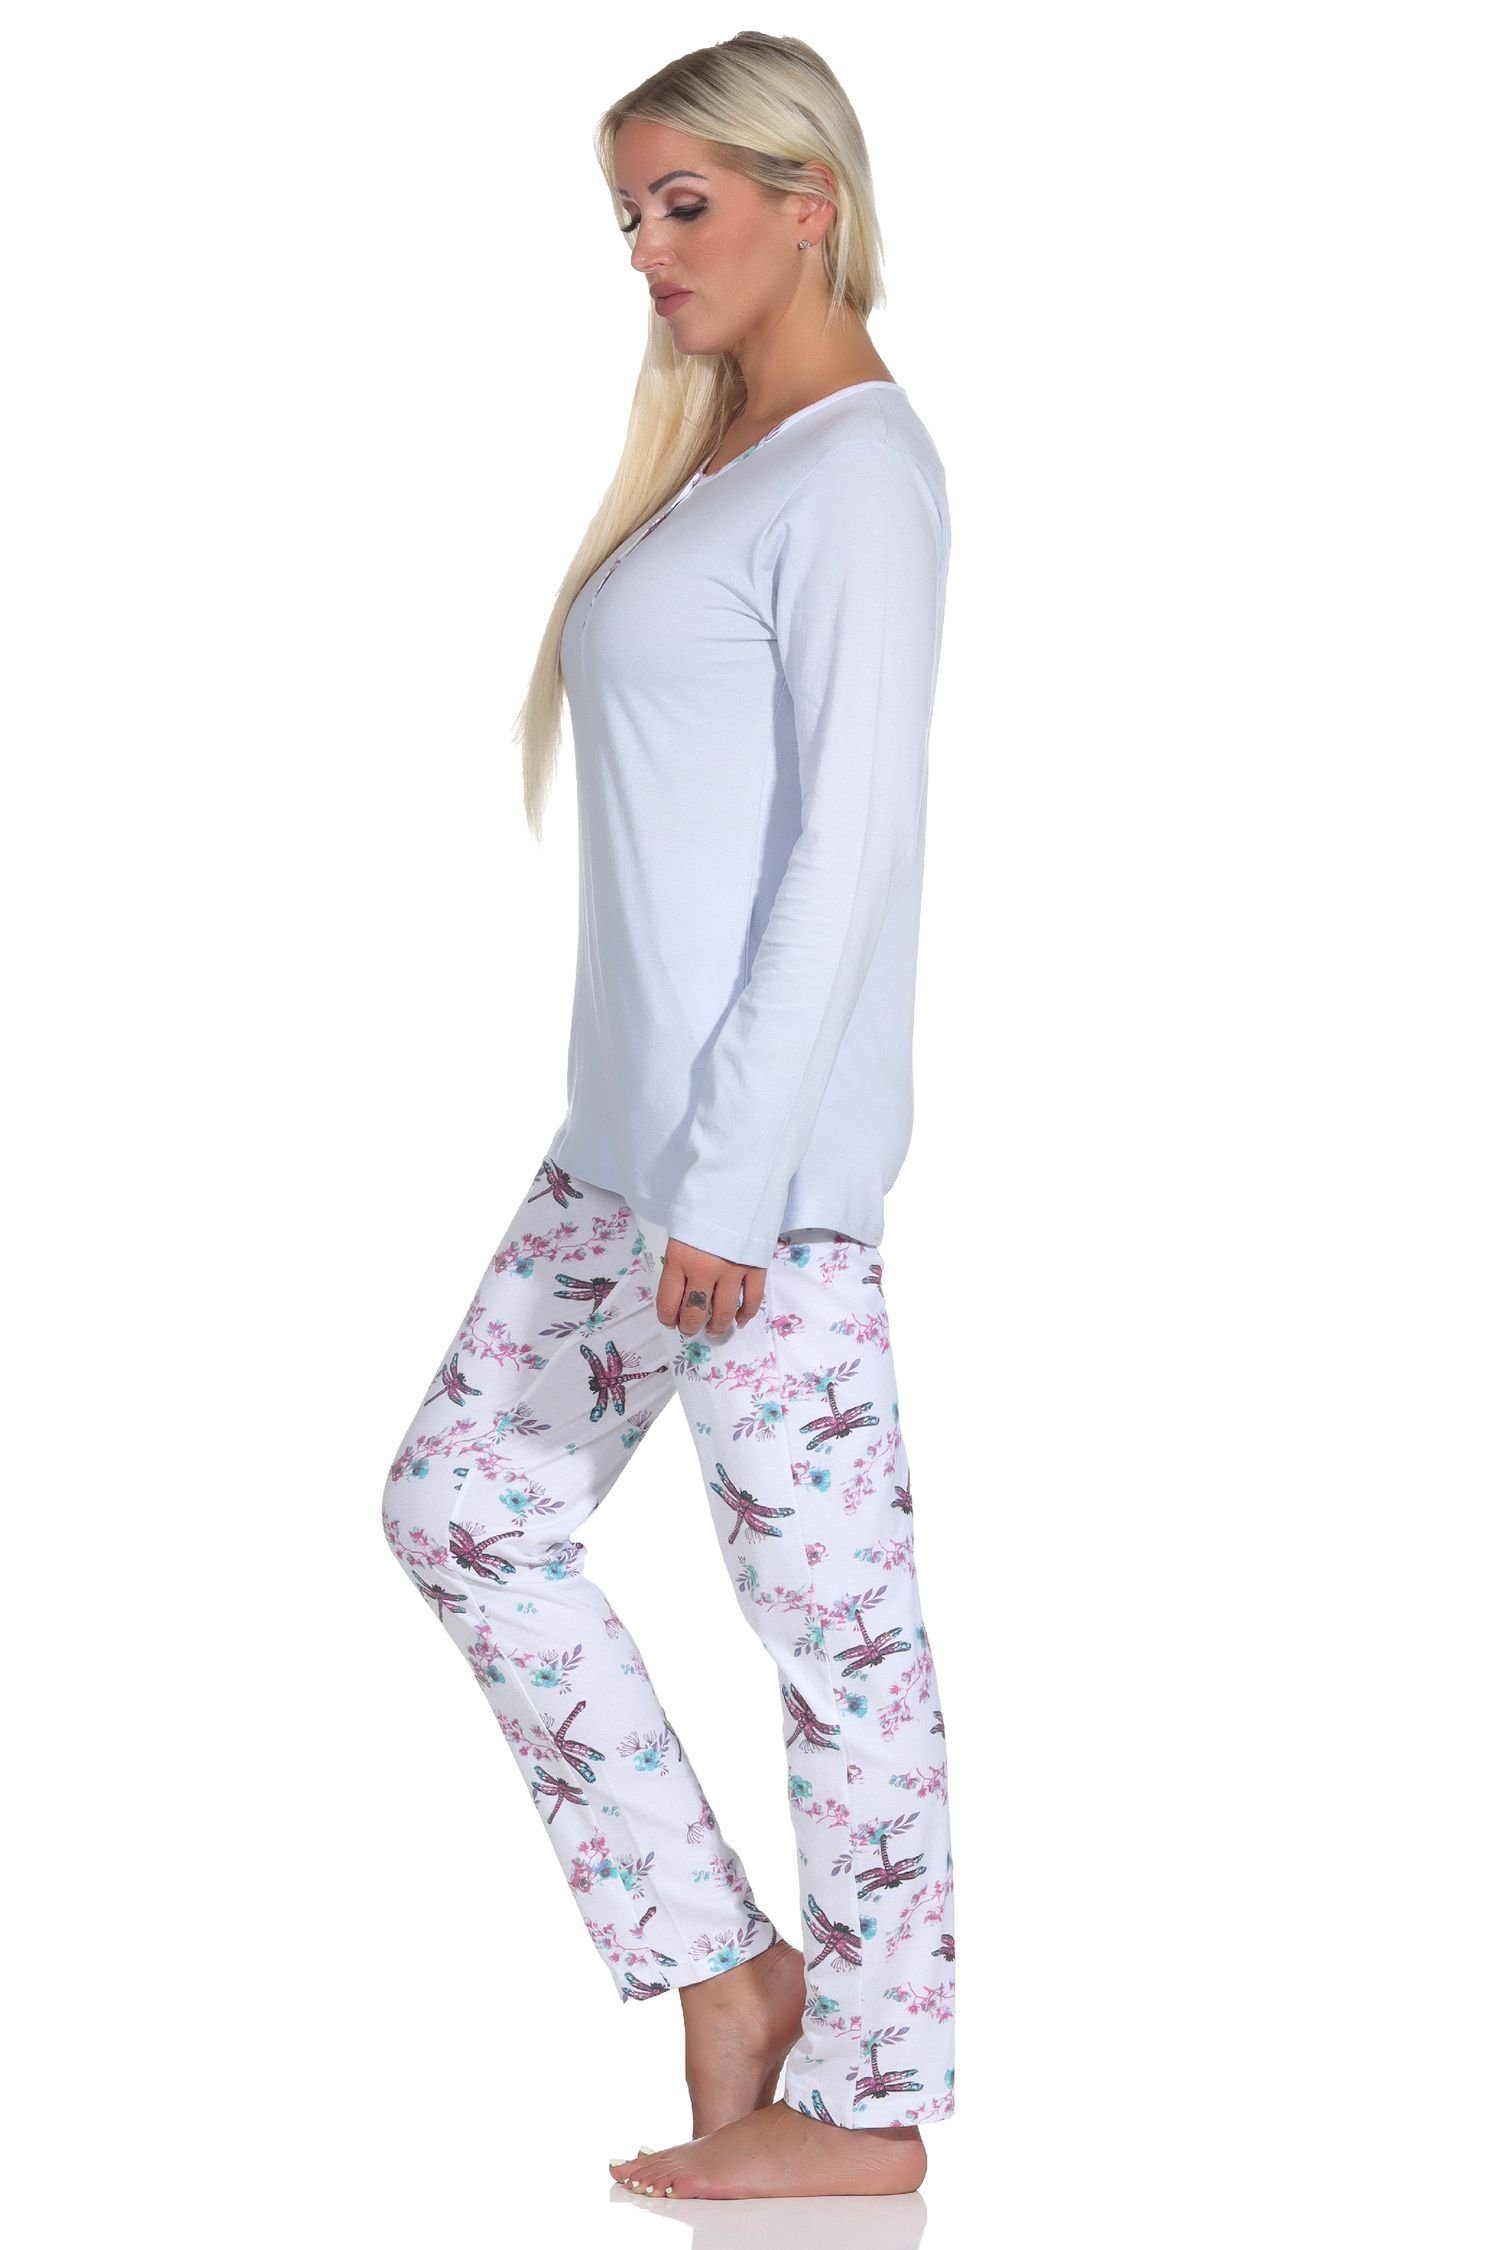 langarm hellblau Normann floralem mit Pyjamahose Print Pyjama Schlafanzug Pyjama in Damen